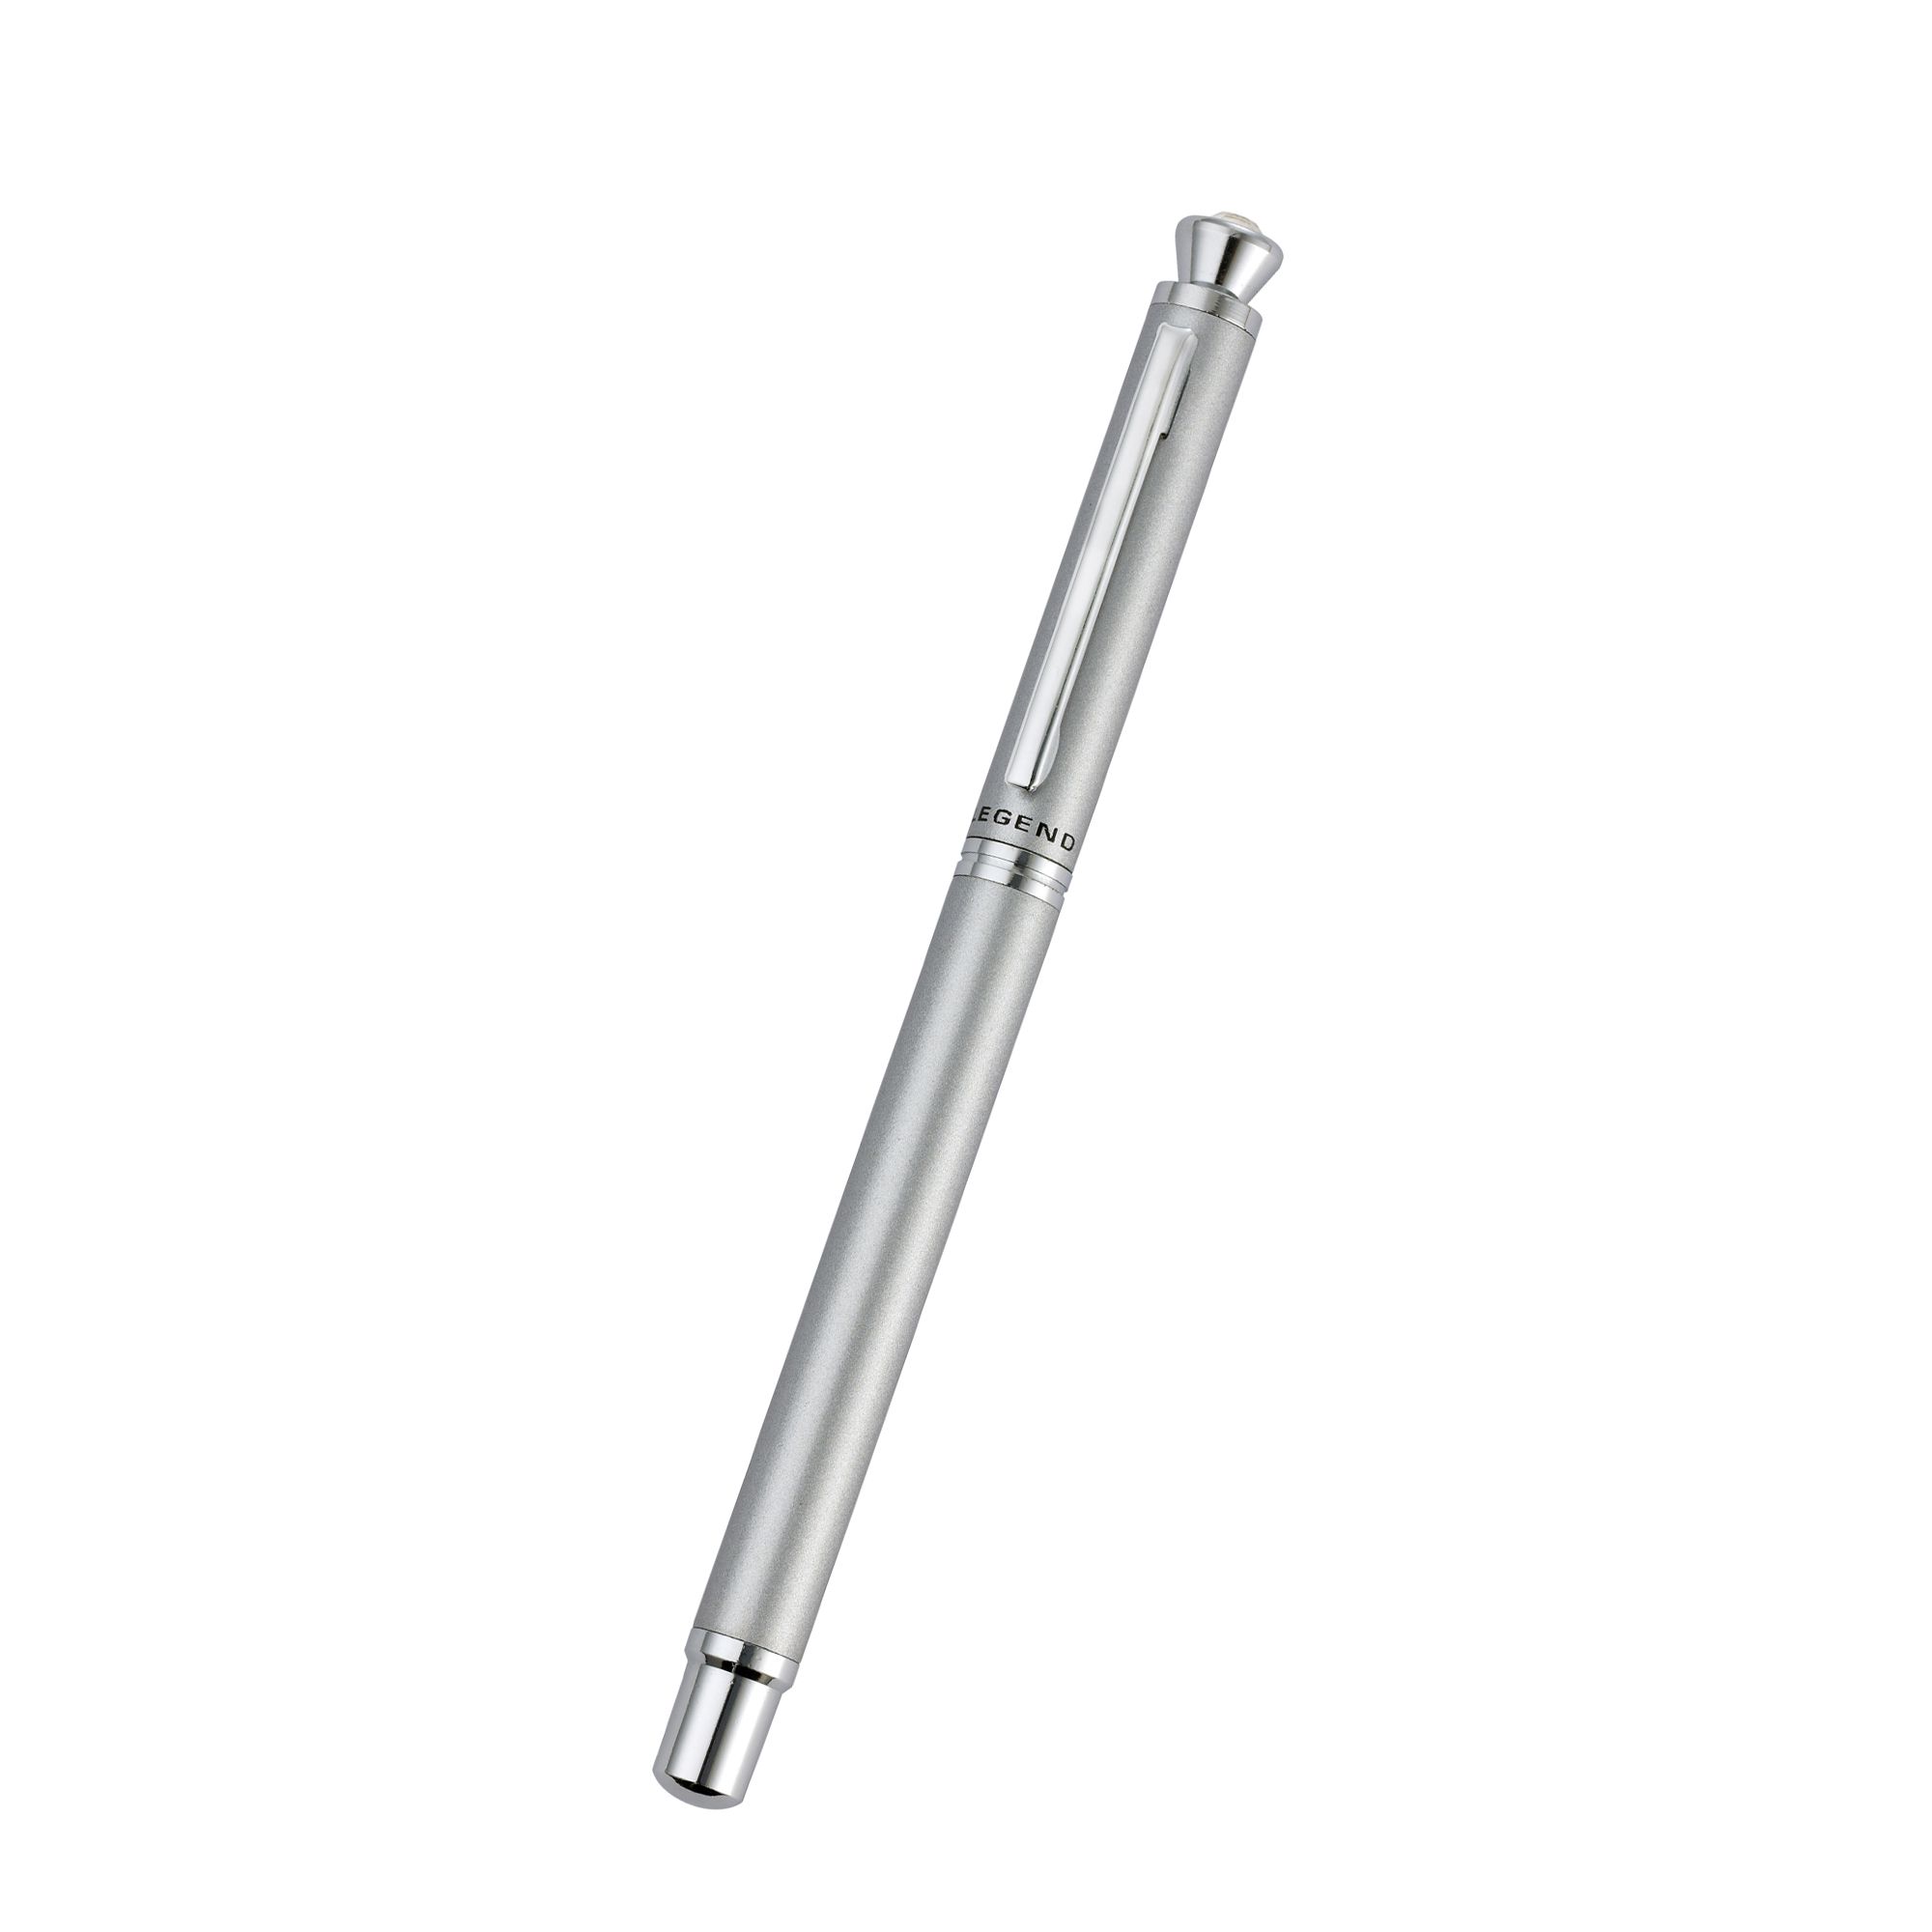     			LEGEND Crystal Pearl Silver Roller Pen(Gel pens)